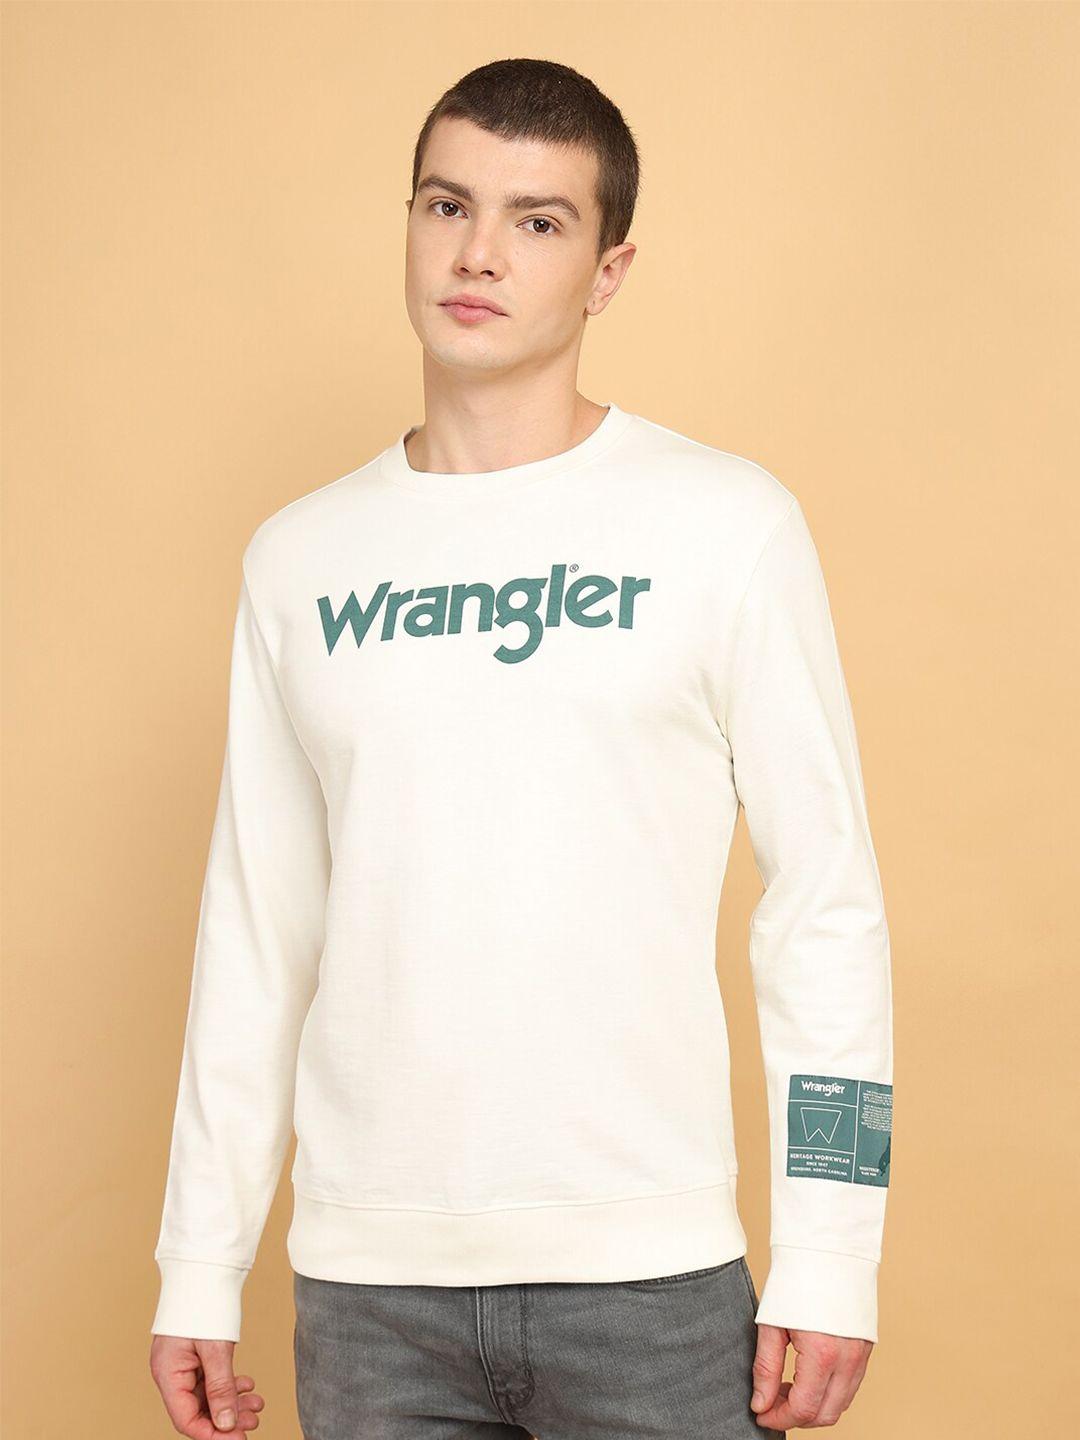 wrangler typography printed pullover sweatshirt